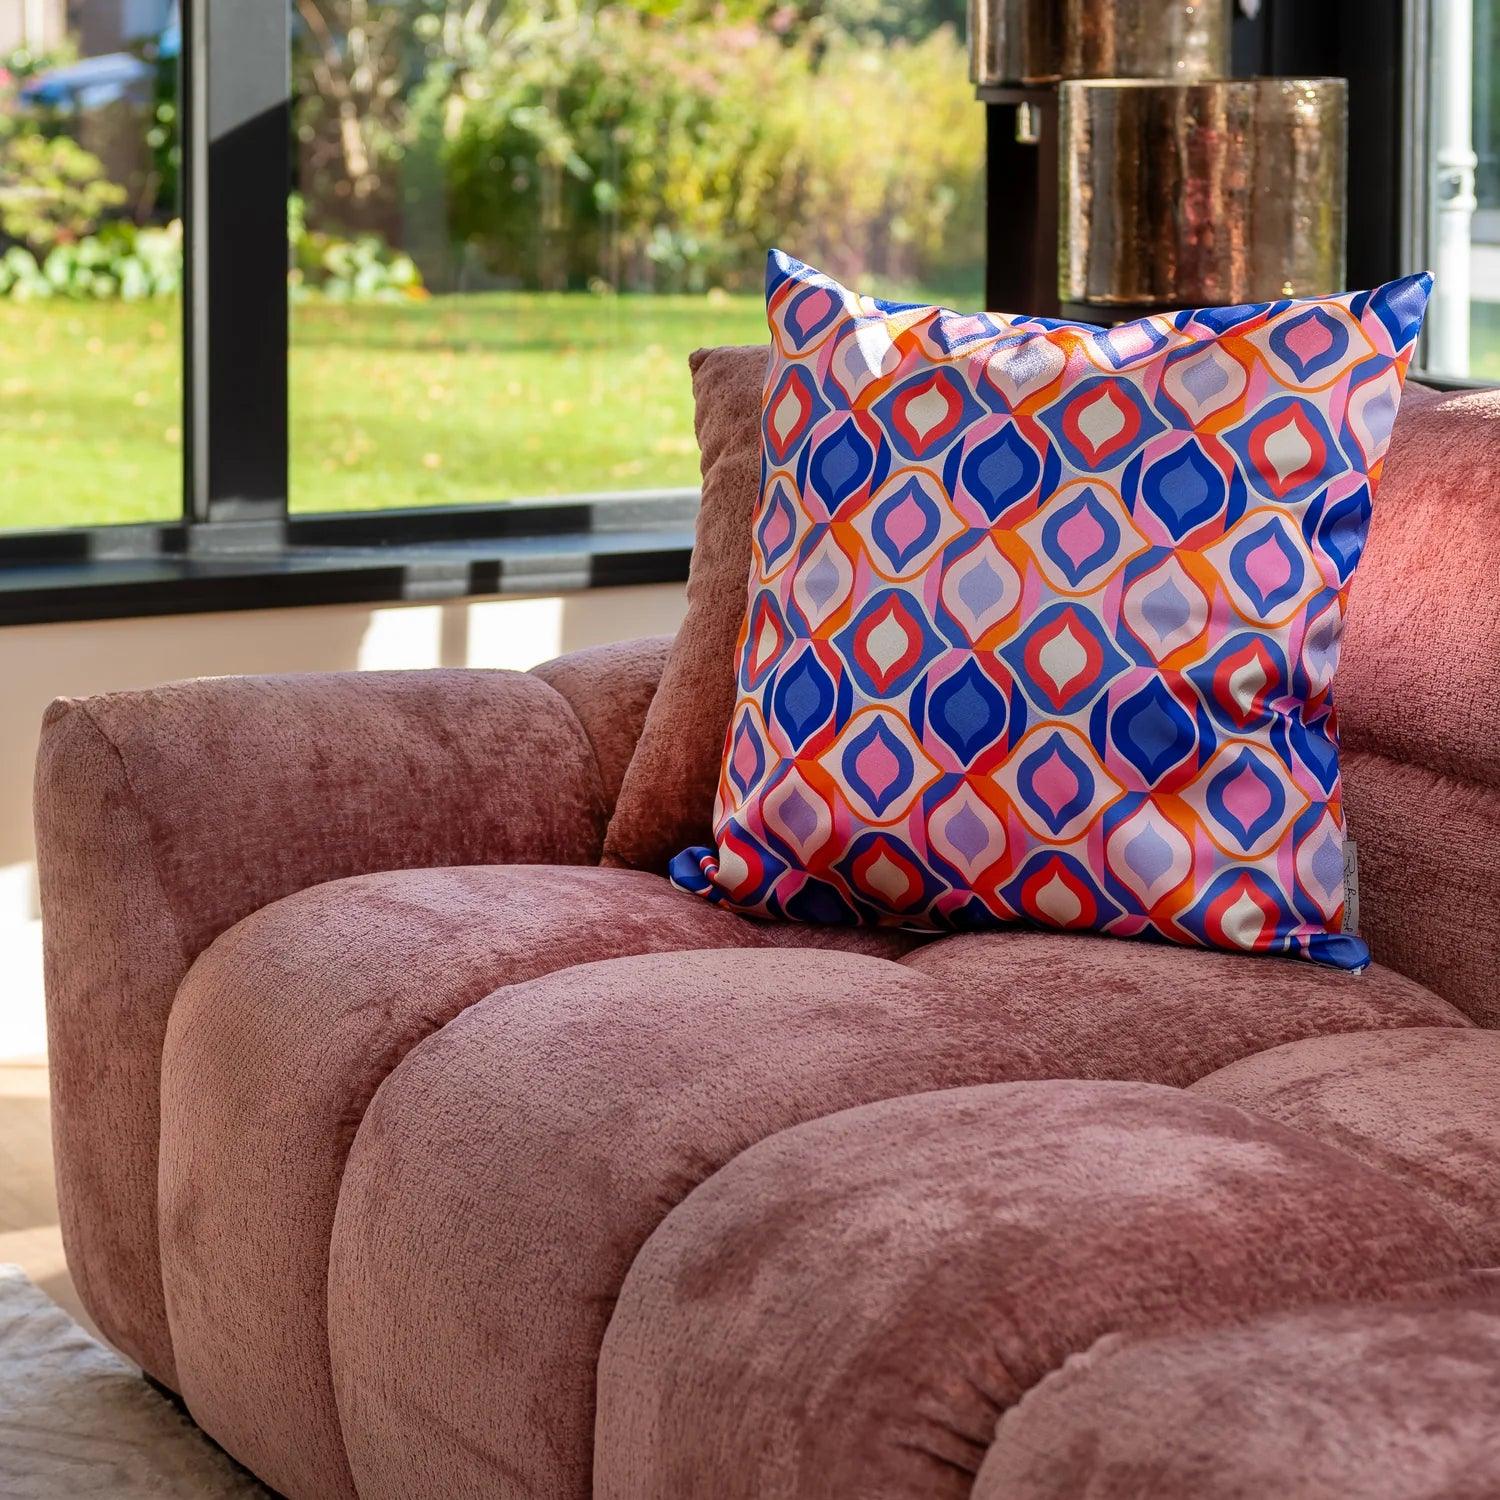 Sofa CHARELLE brudny róż Richmond Interiors    Eye on Design